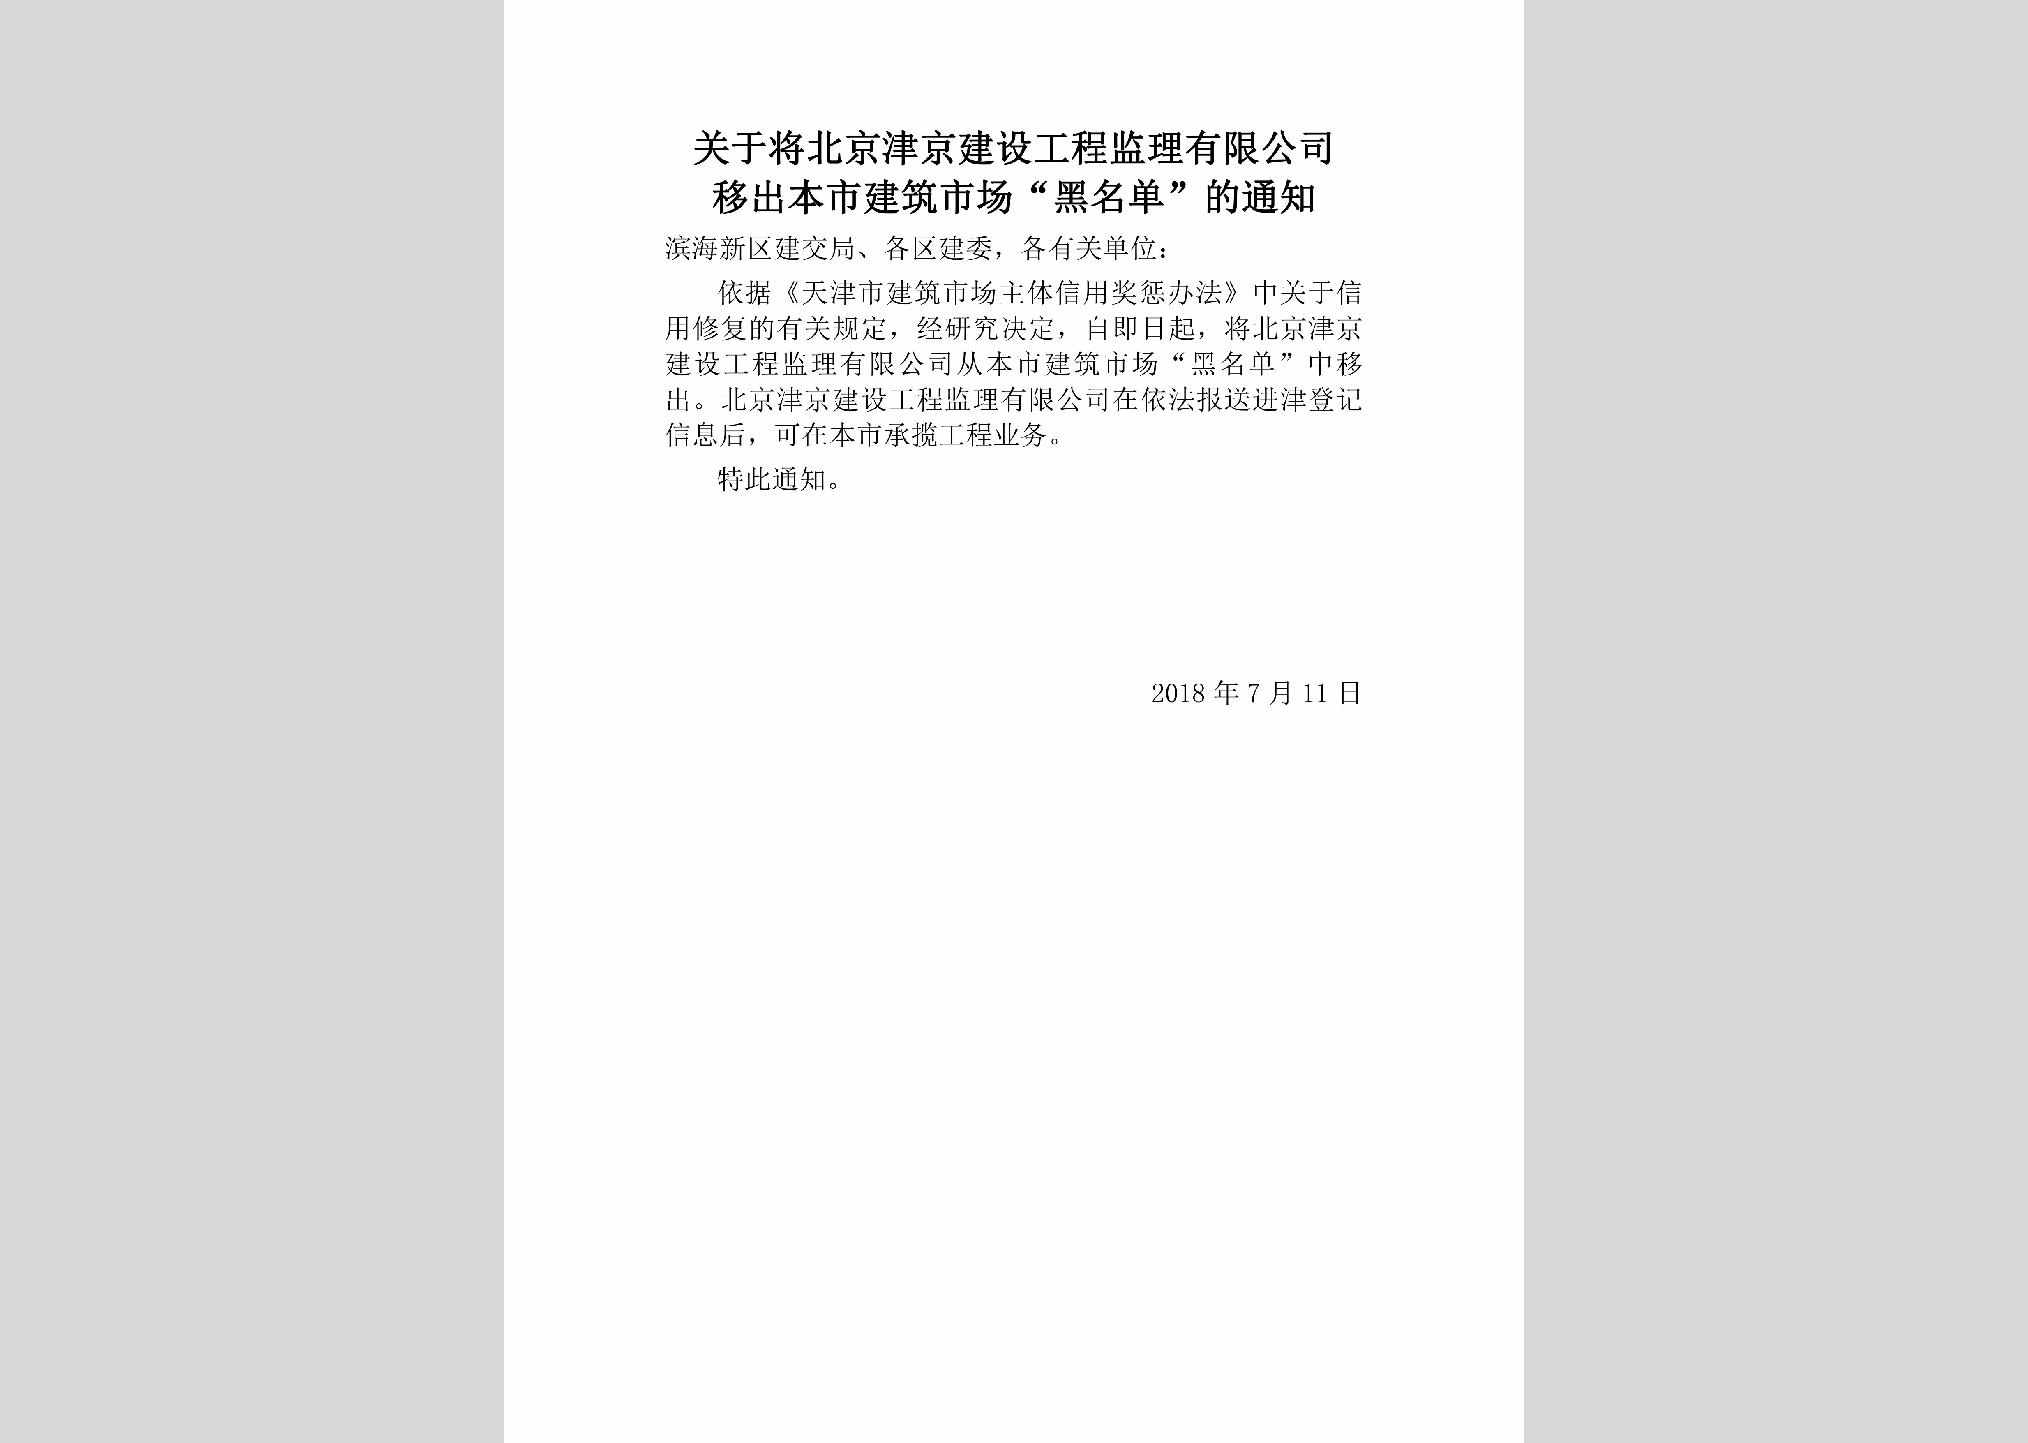 TJ-JJJSYCHM-2018：关于将北京津京建设工程监理有限公司移出本市建筑市场“黑名单”的通知